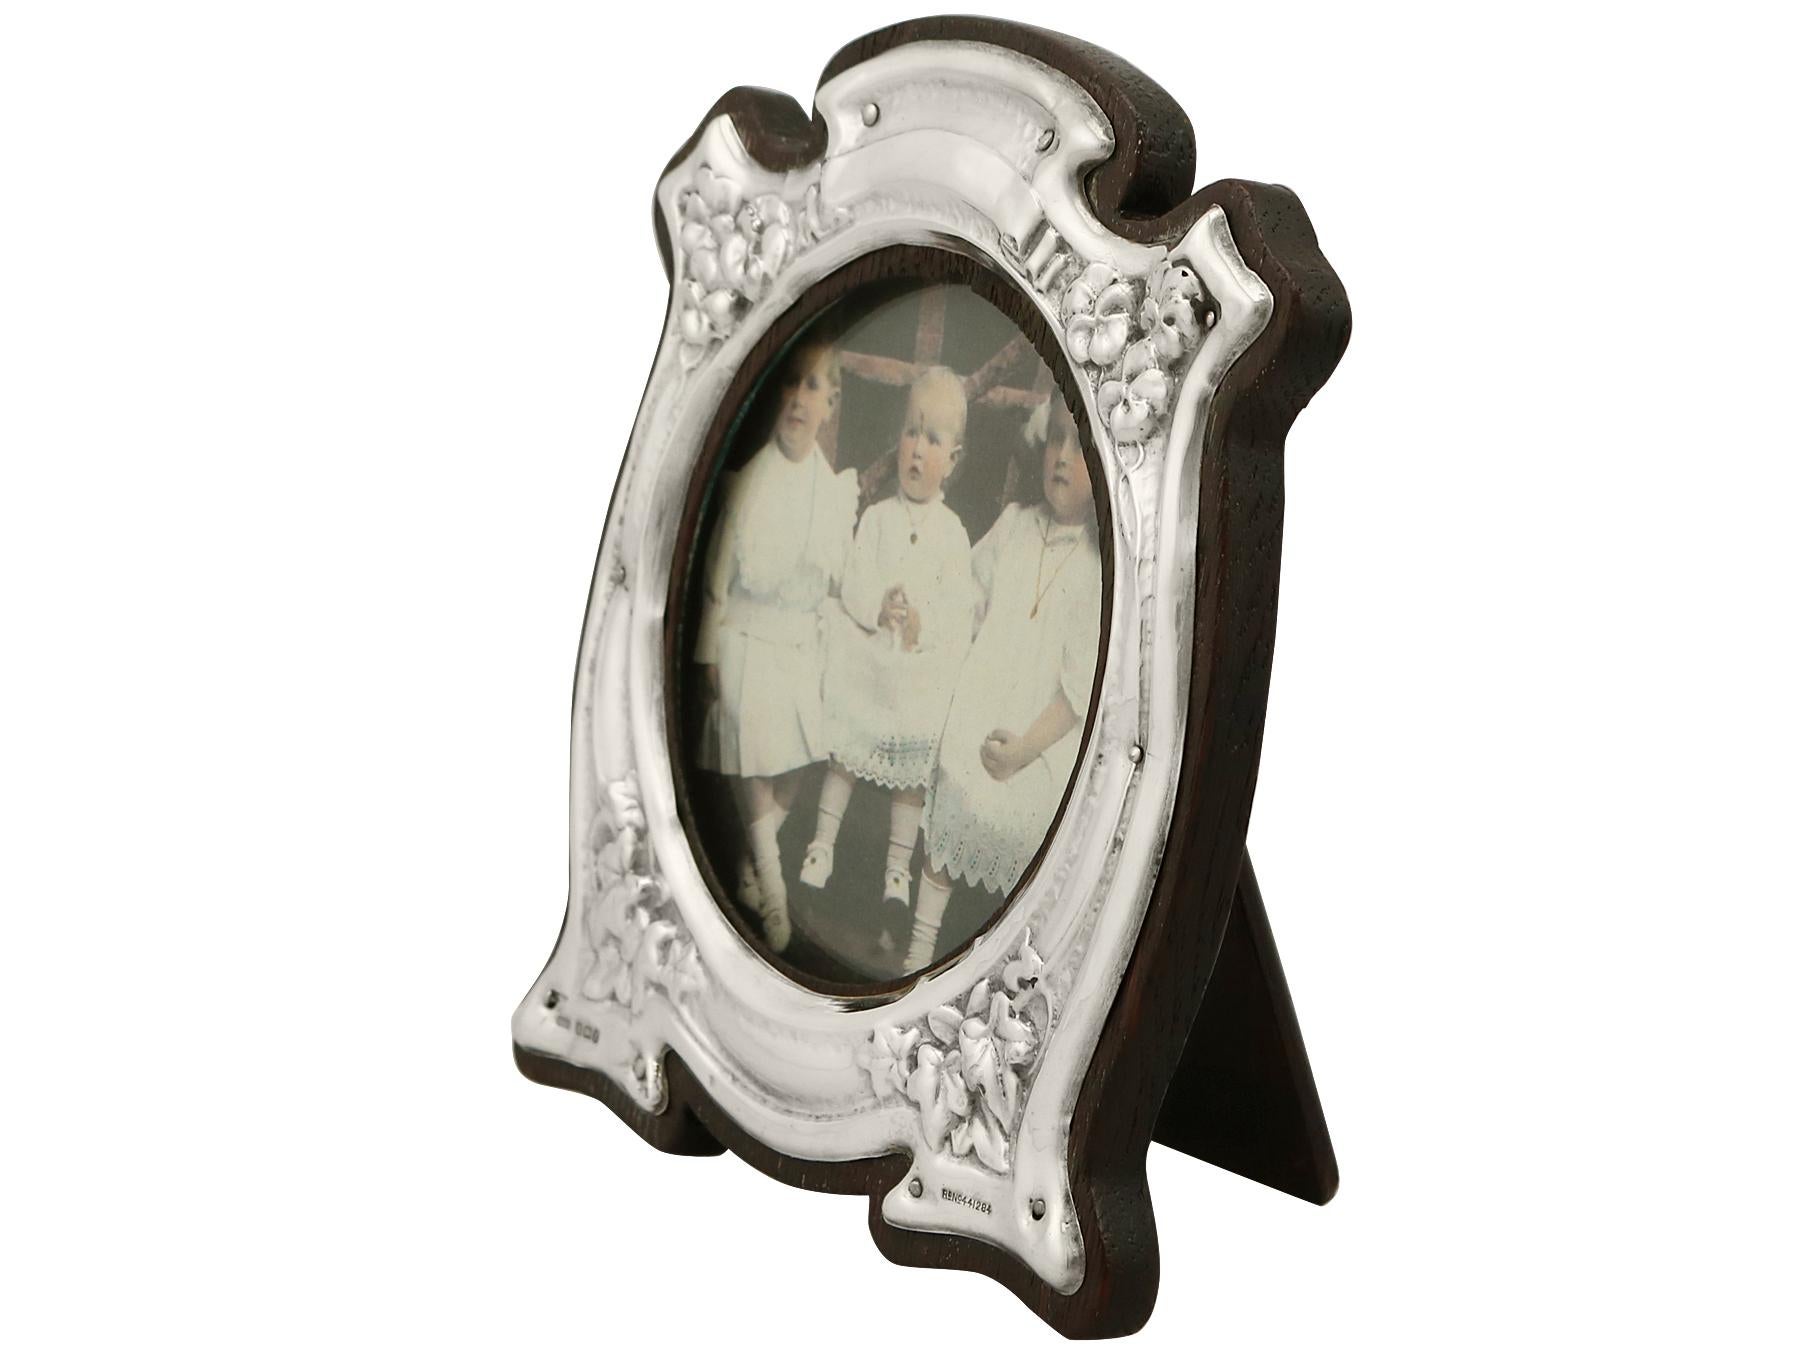 English Art Nouveau Style Antique Edwardian Sterling Silver Photograph Frame, 1905